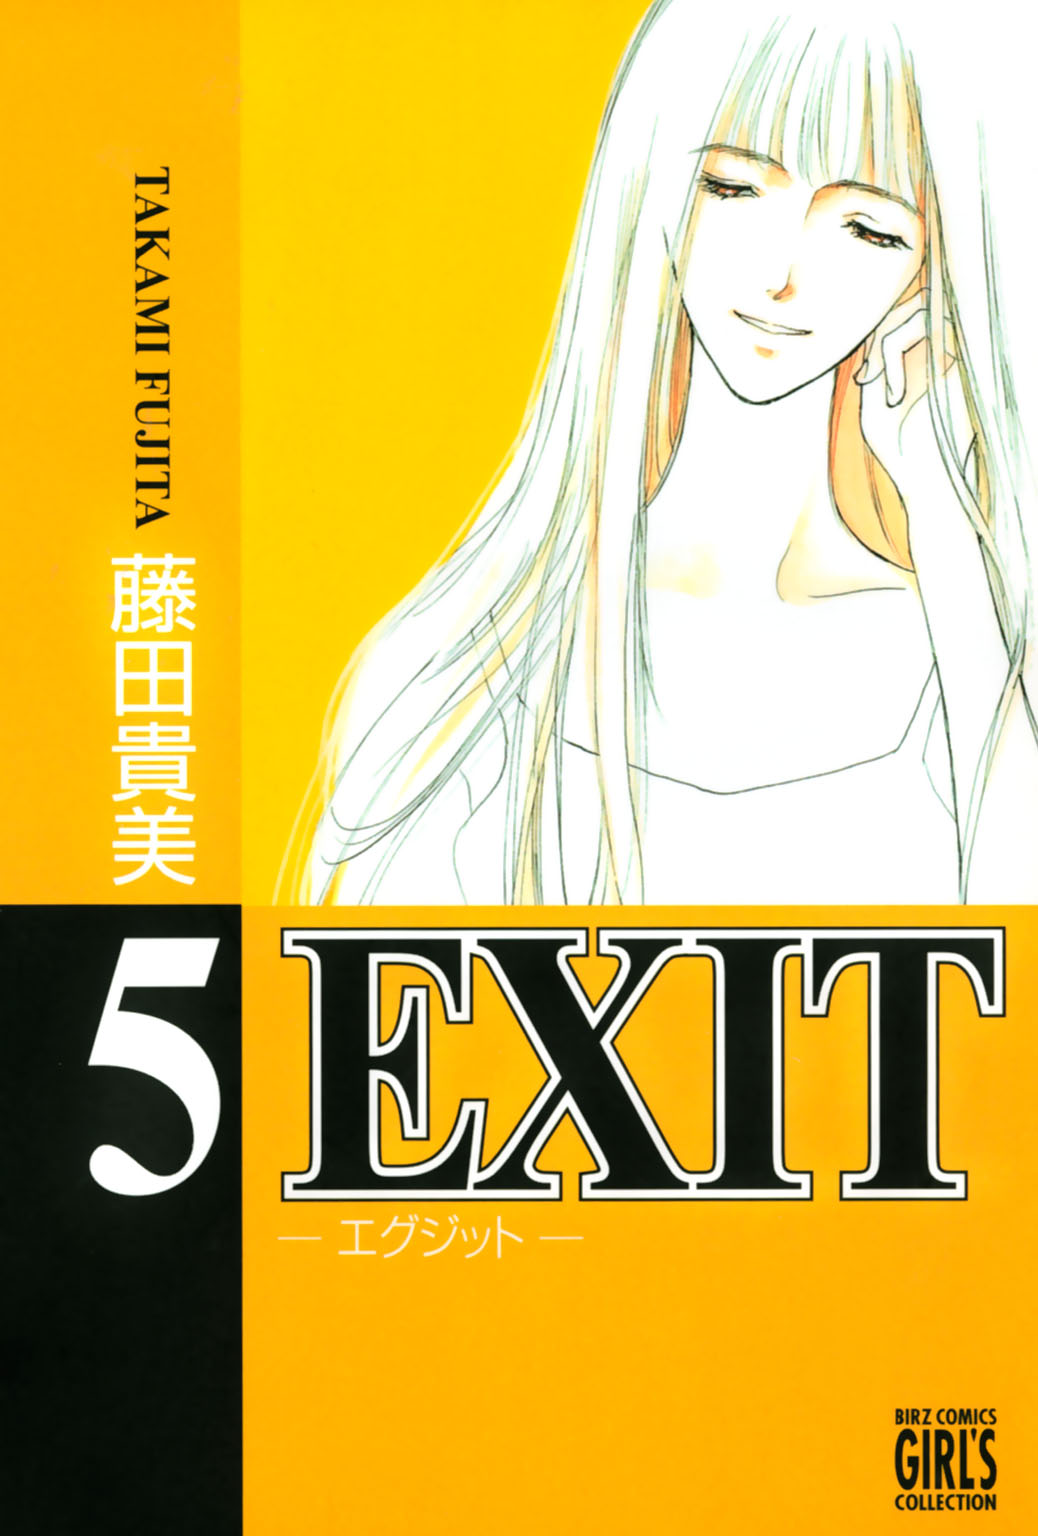 EXIT～エグジット～ (5) - 藤田貴美 - 漫画・無料試し読みなら、電子